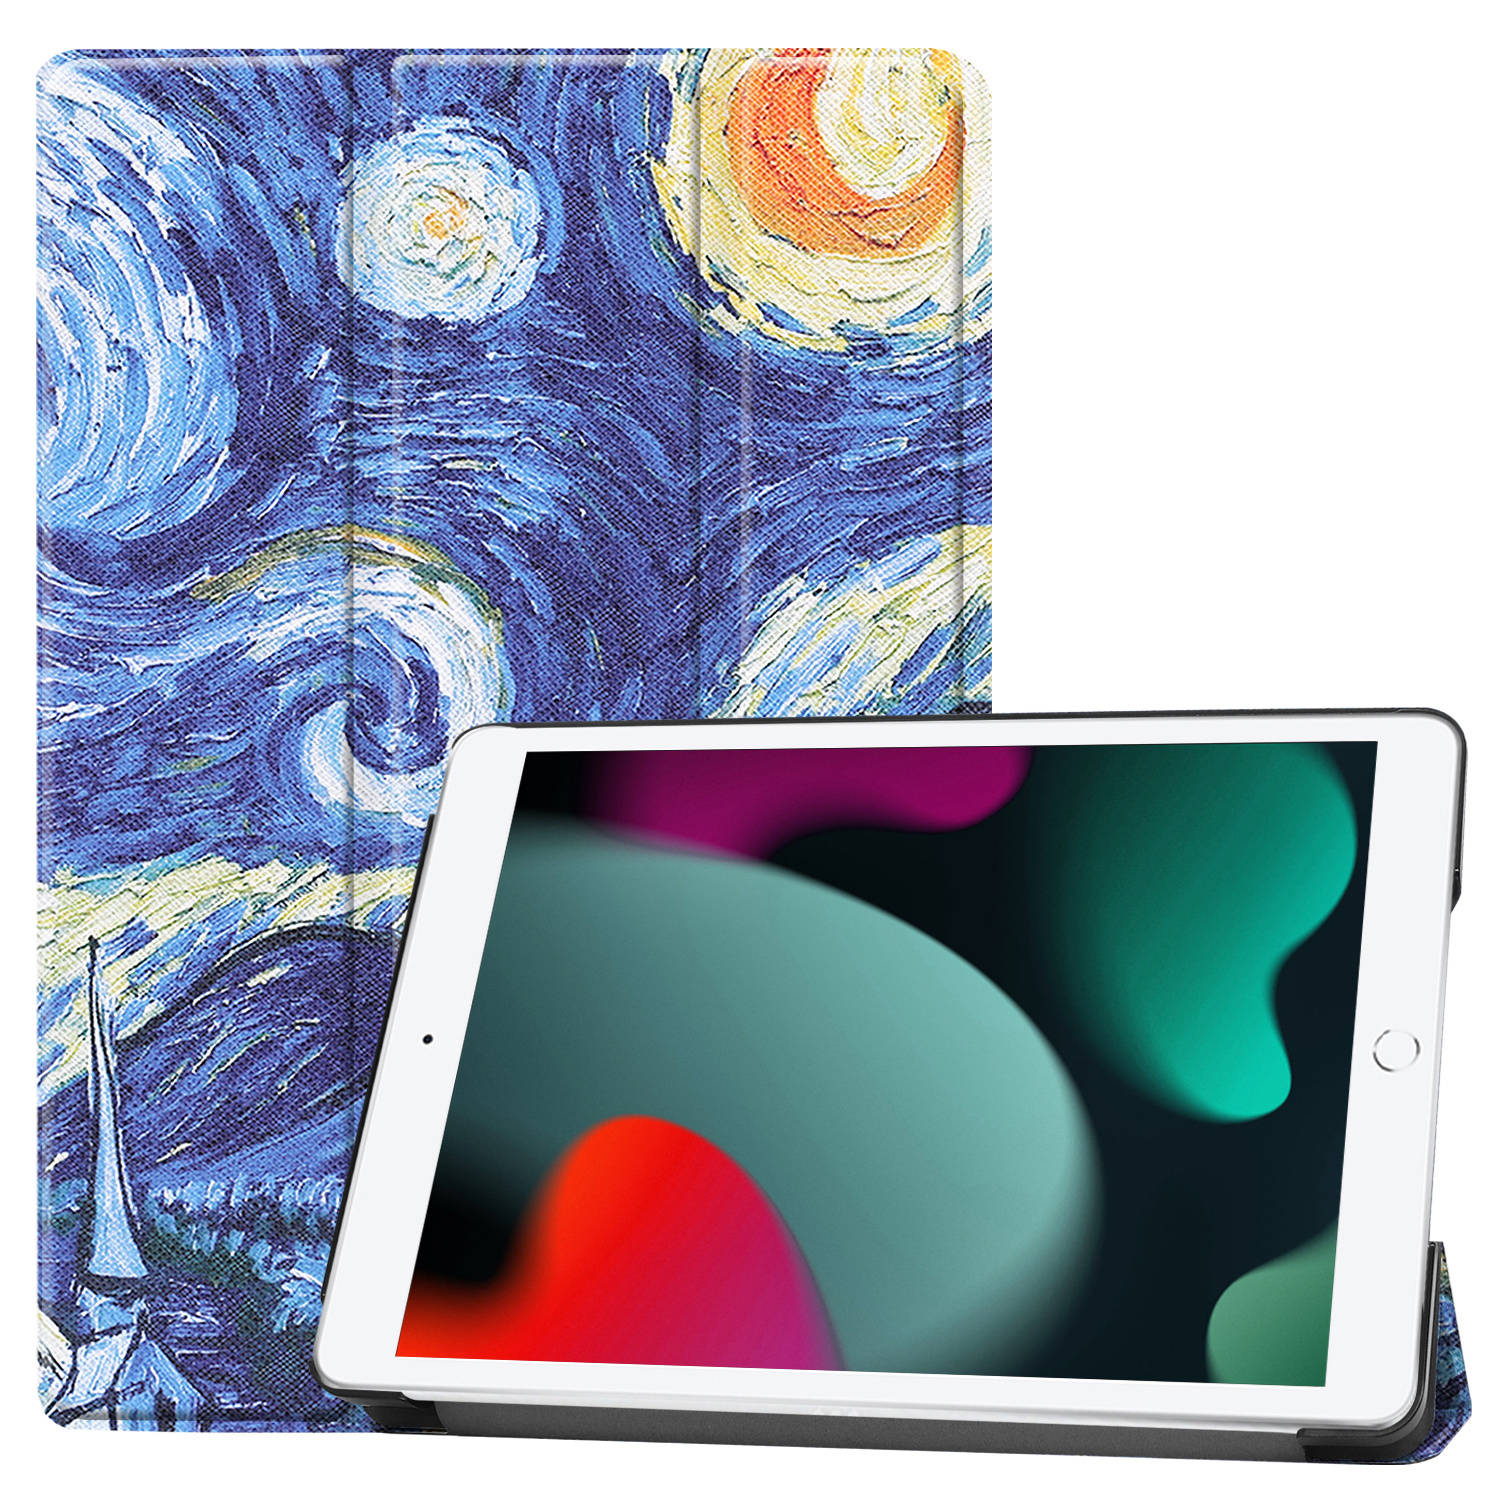 Basey iPad 10.2 2020 Hoes Book Case Hoesje - iPad 10.2 2020 Hoesje Hard Cover Case Hoes - Sterrenhemel